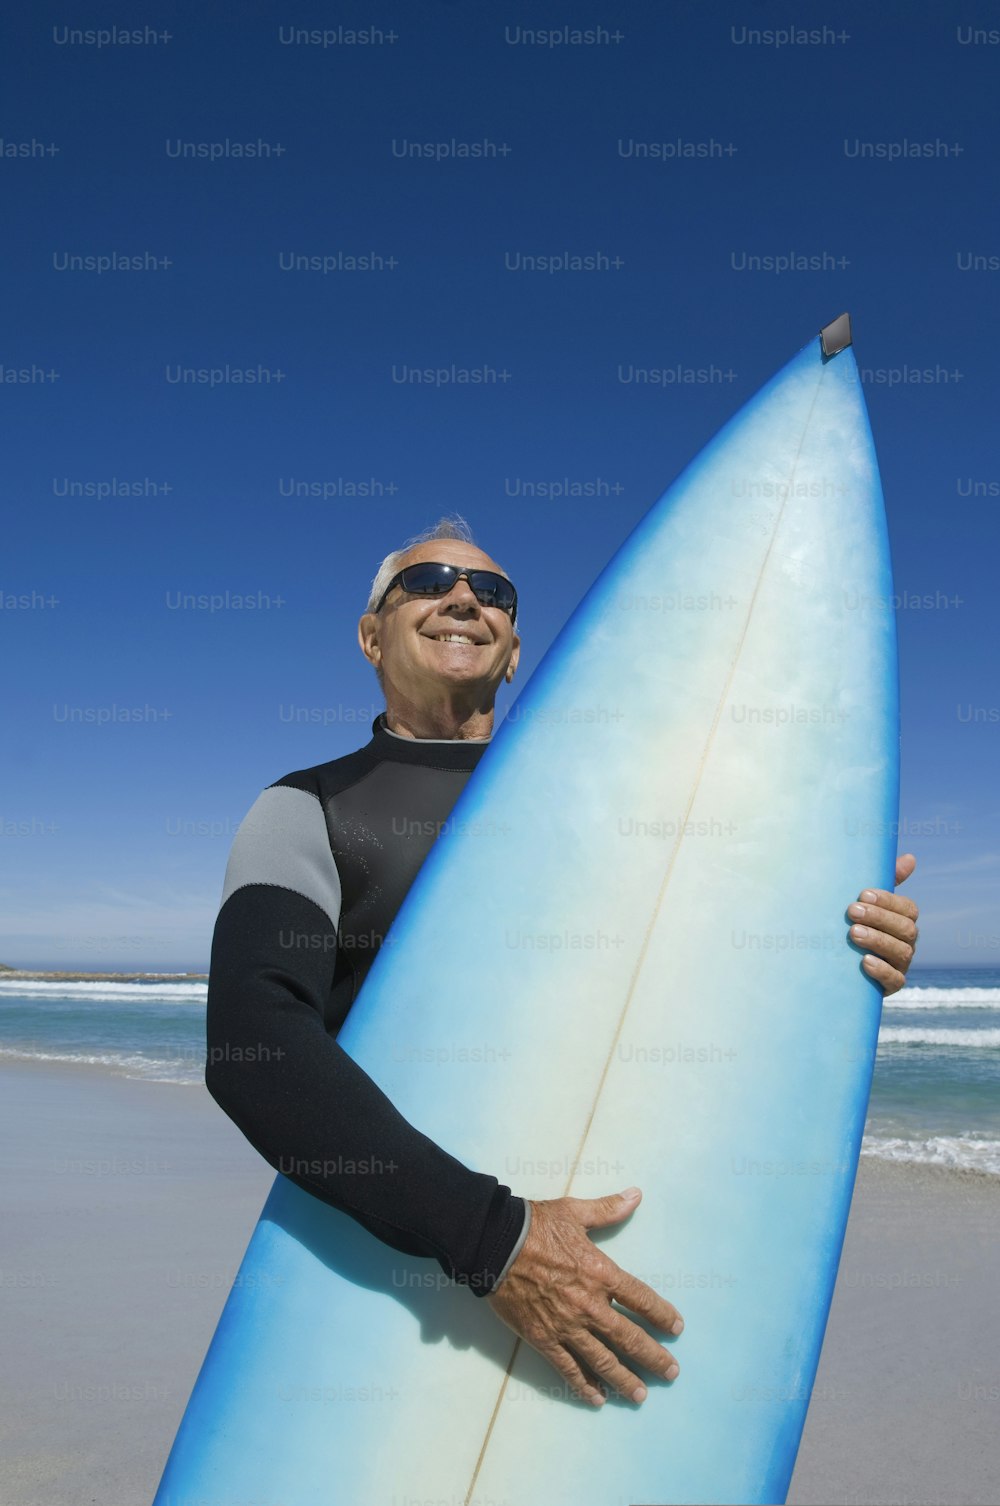 a man holding a blue surfboard on a beach